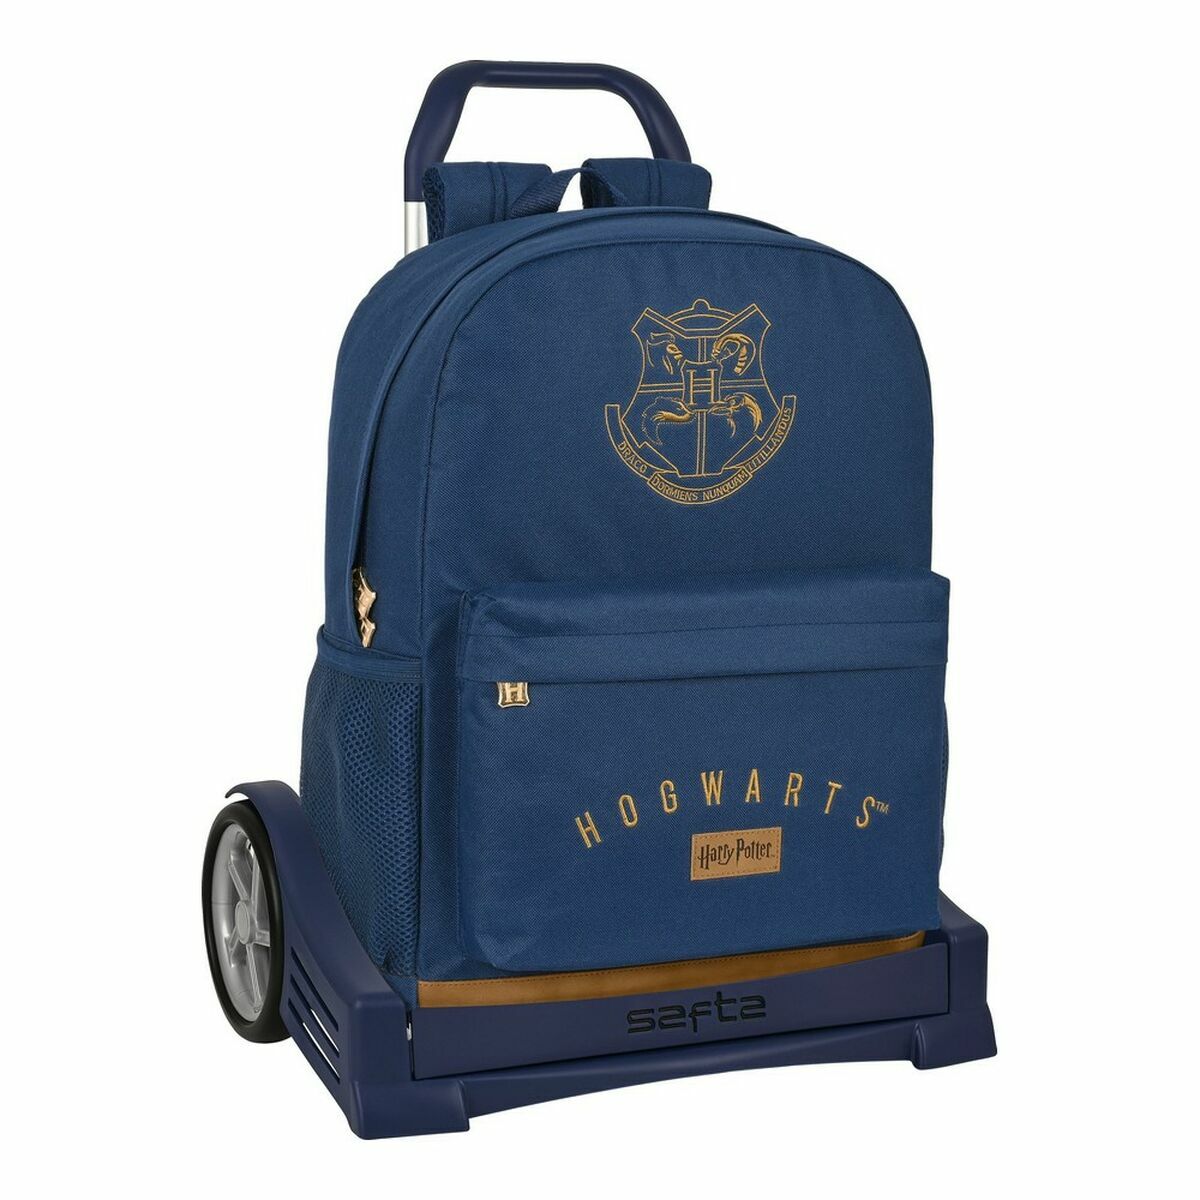 Kaufe Schulrucksack mit Rädern Safta Marineblau Harry Potter 32 x 14 x 43 cm bei AWK Flagship um € 69.00